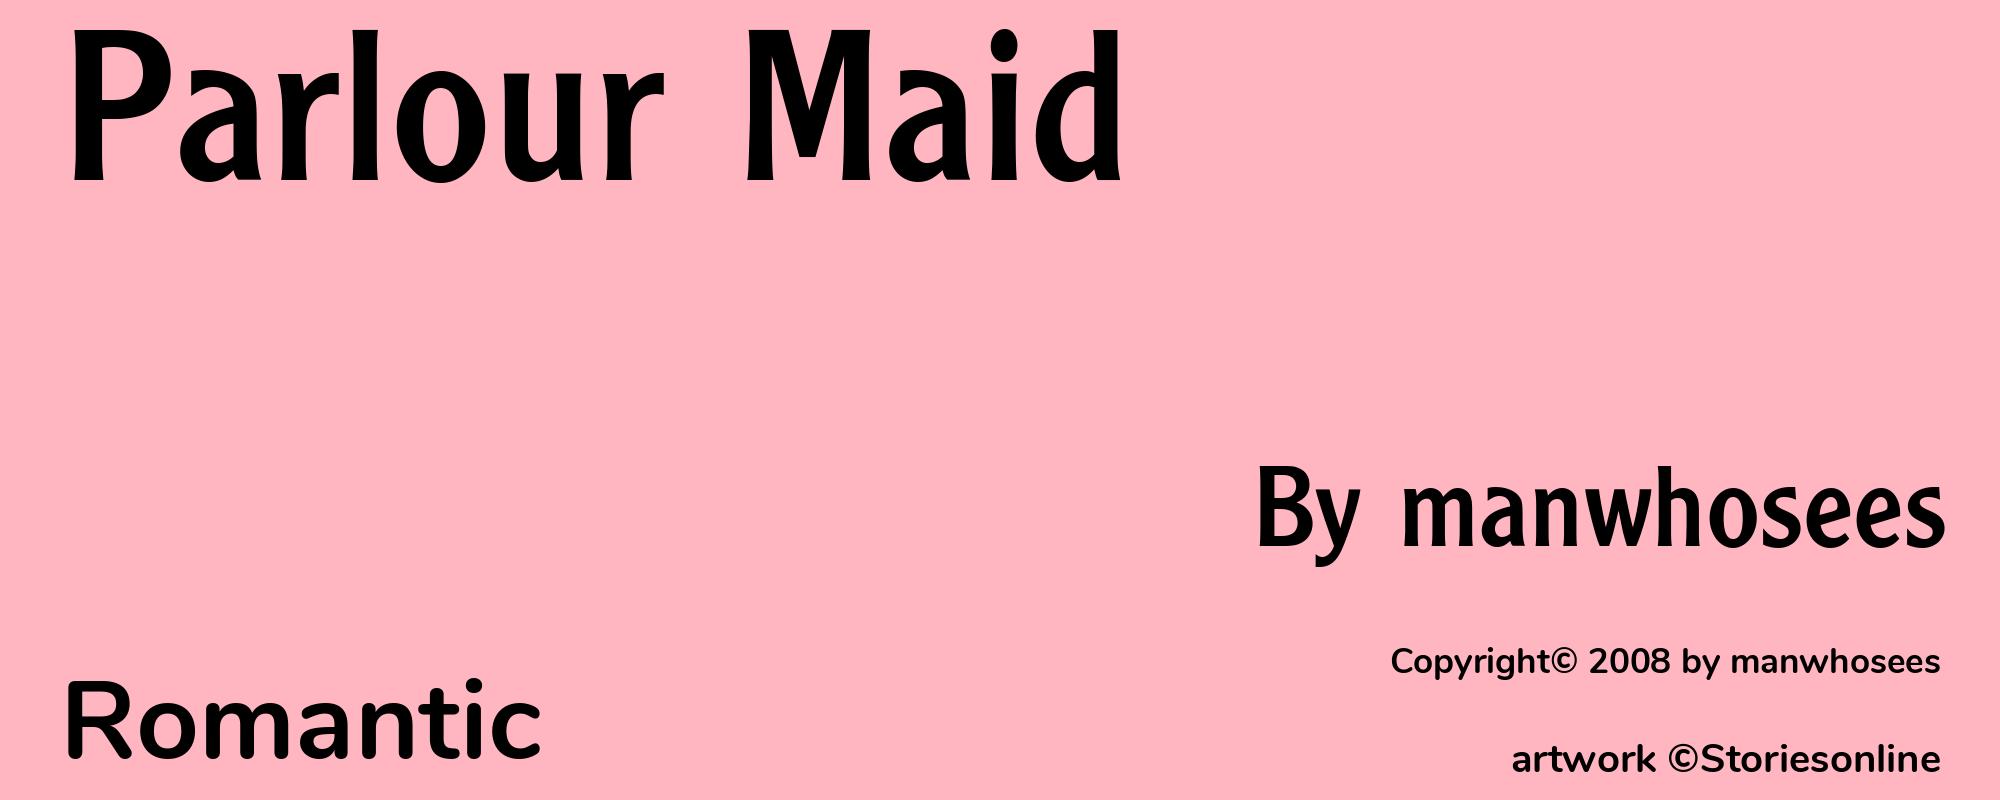 Parlour Maid - Cover